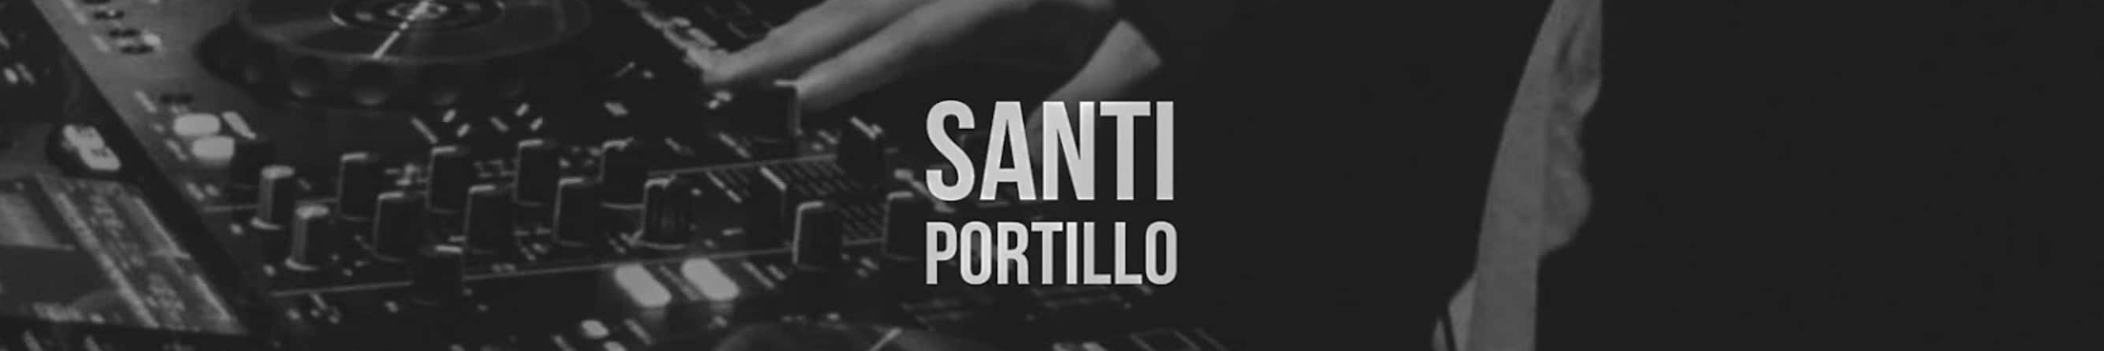 Santi Portillo